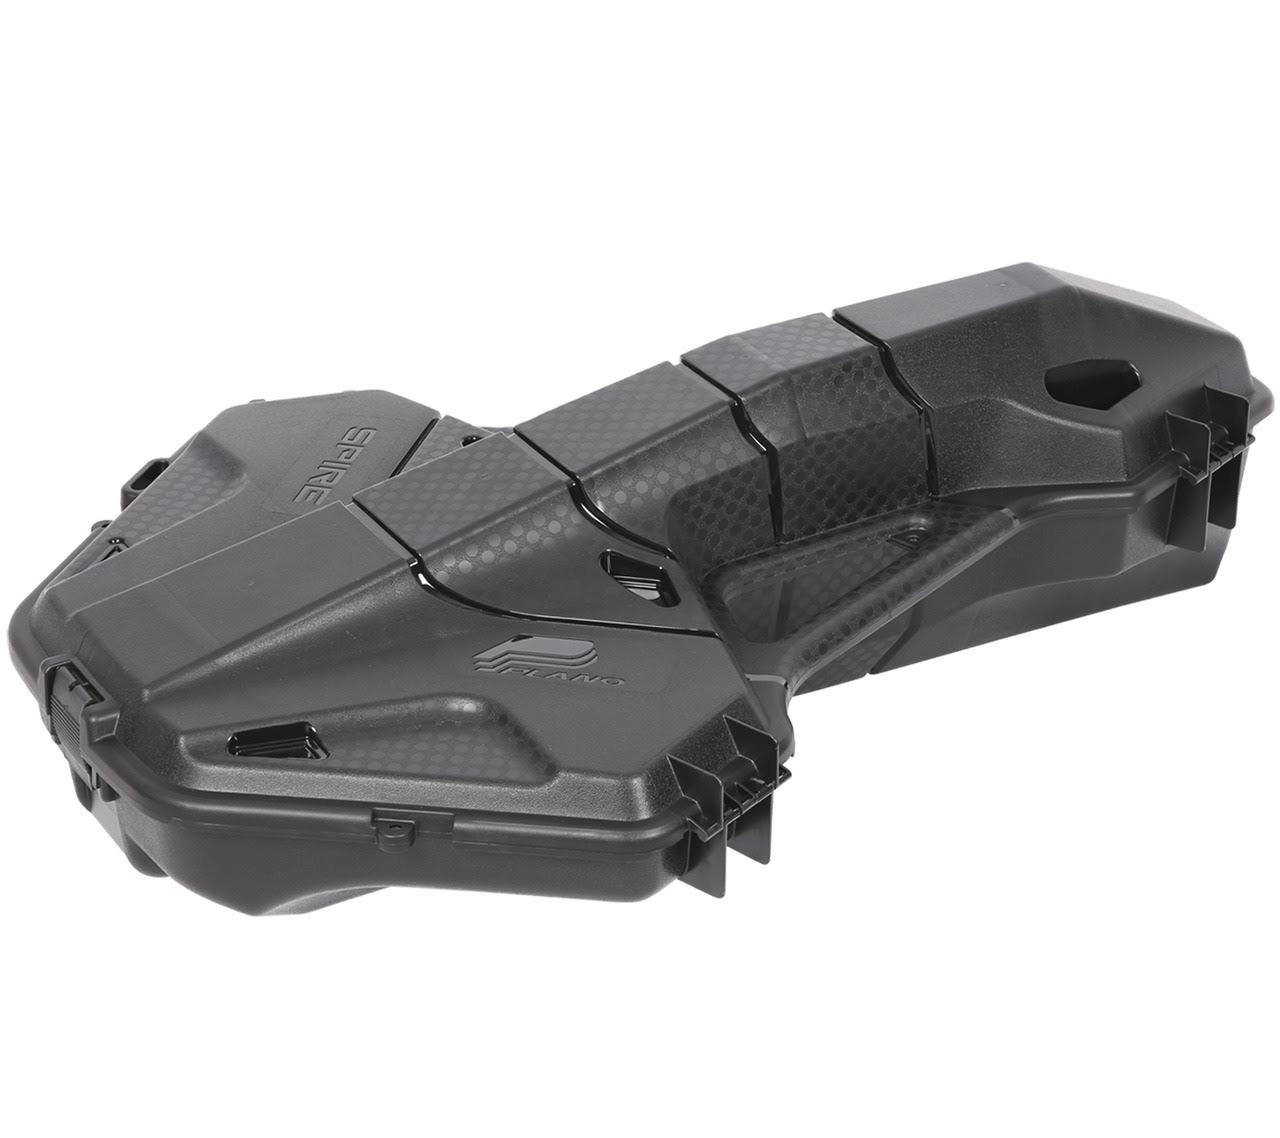 Plano Spire Compact Crossbow Case - Black